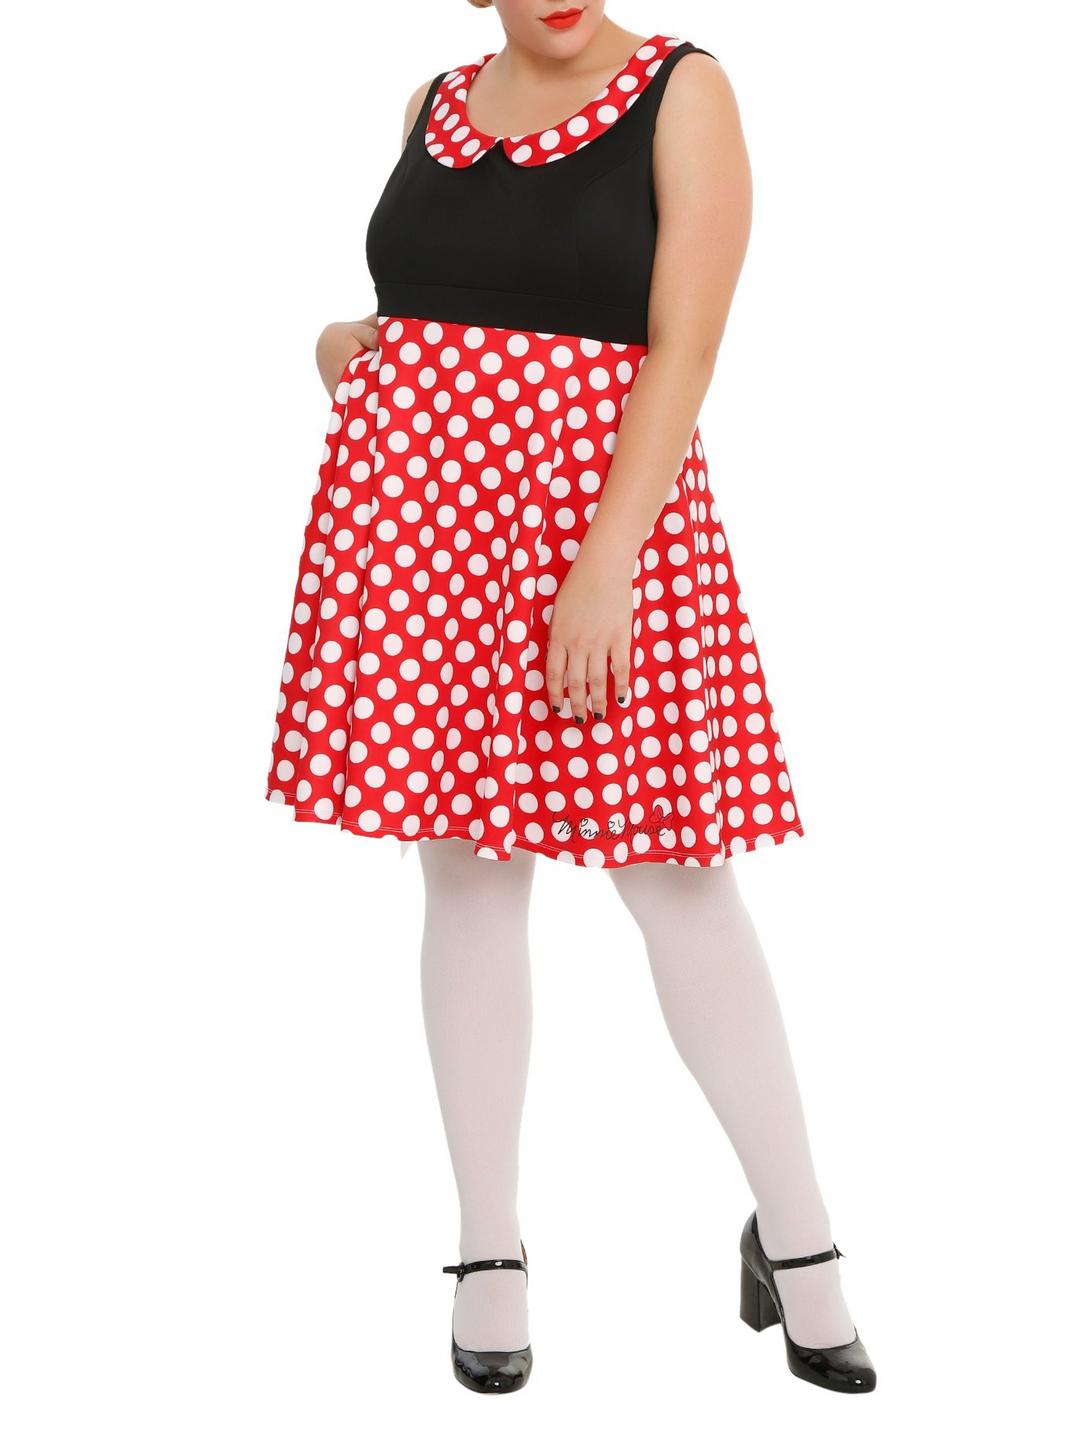 Disney Minnie Mouse Polka Dot Dress Plus Size, BLACK, hi-res